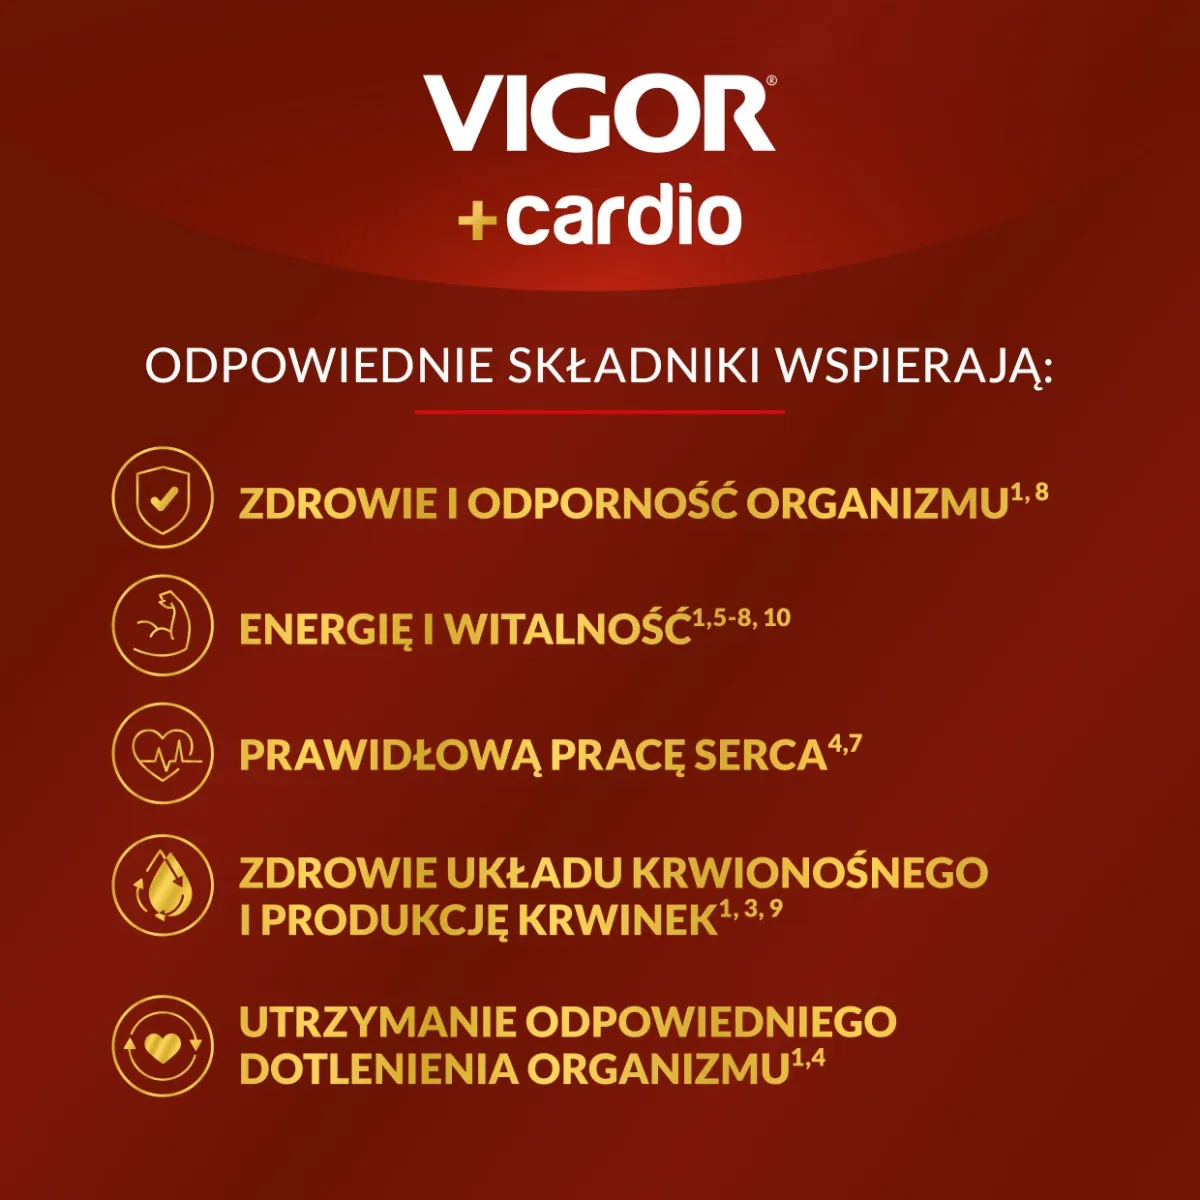 Vigor+ Cardio, suplement diety, 1000 ml 